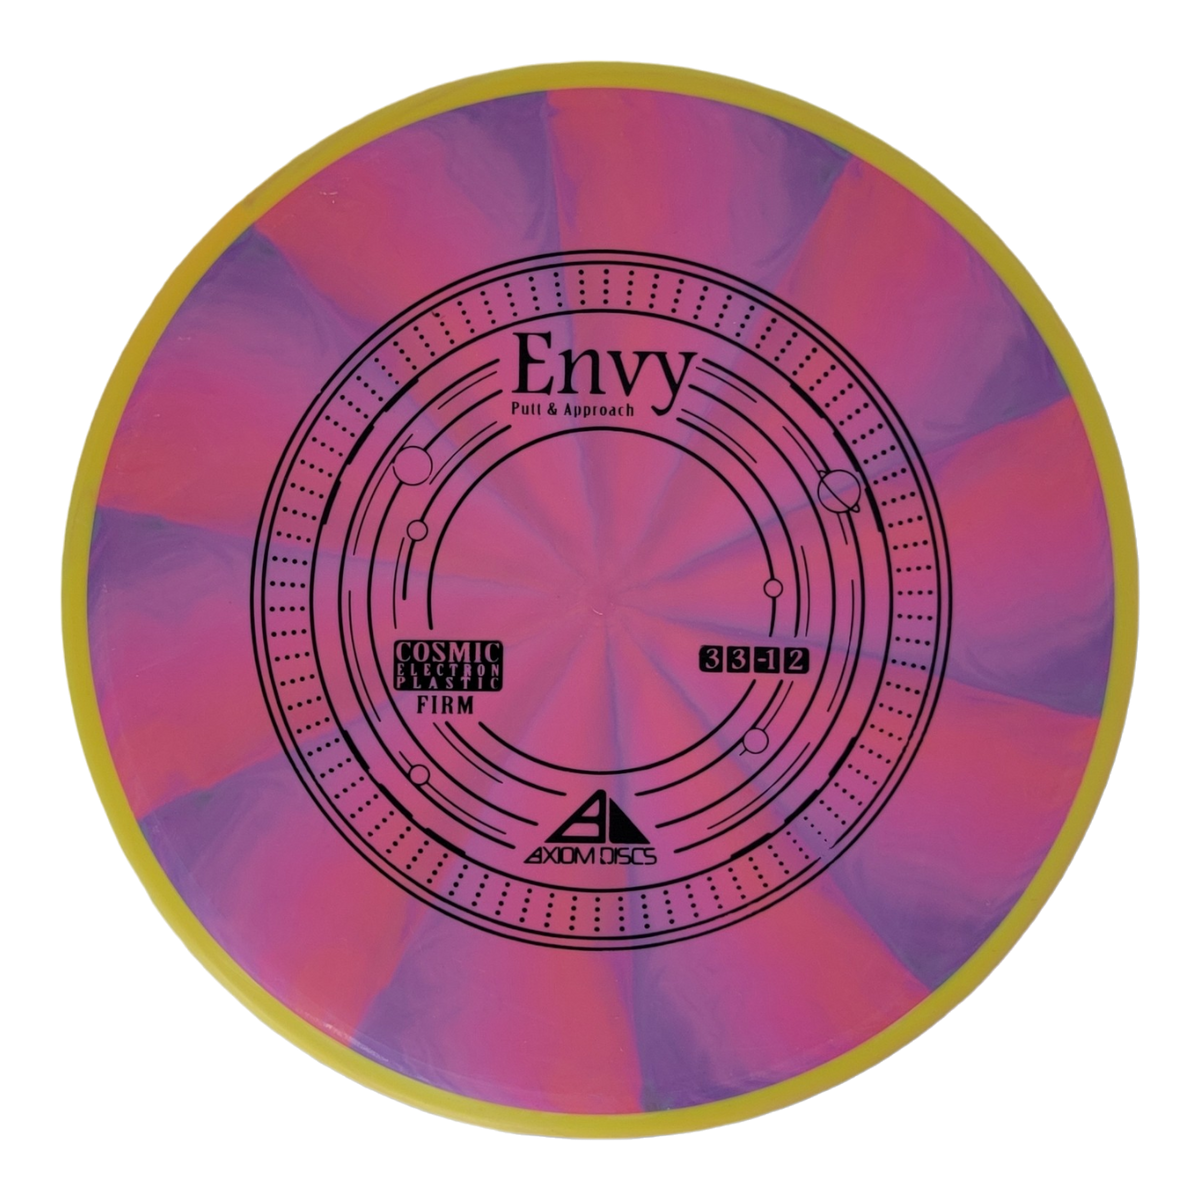 Axiom Cosmic Electron (Firm) Envy